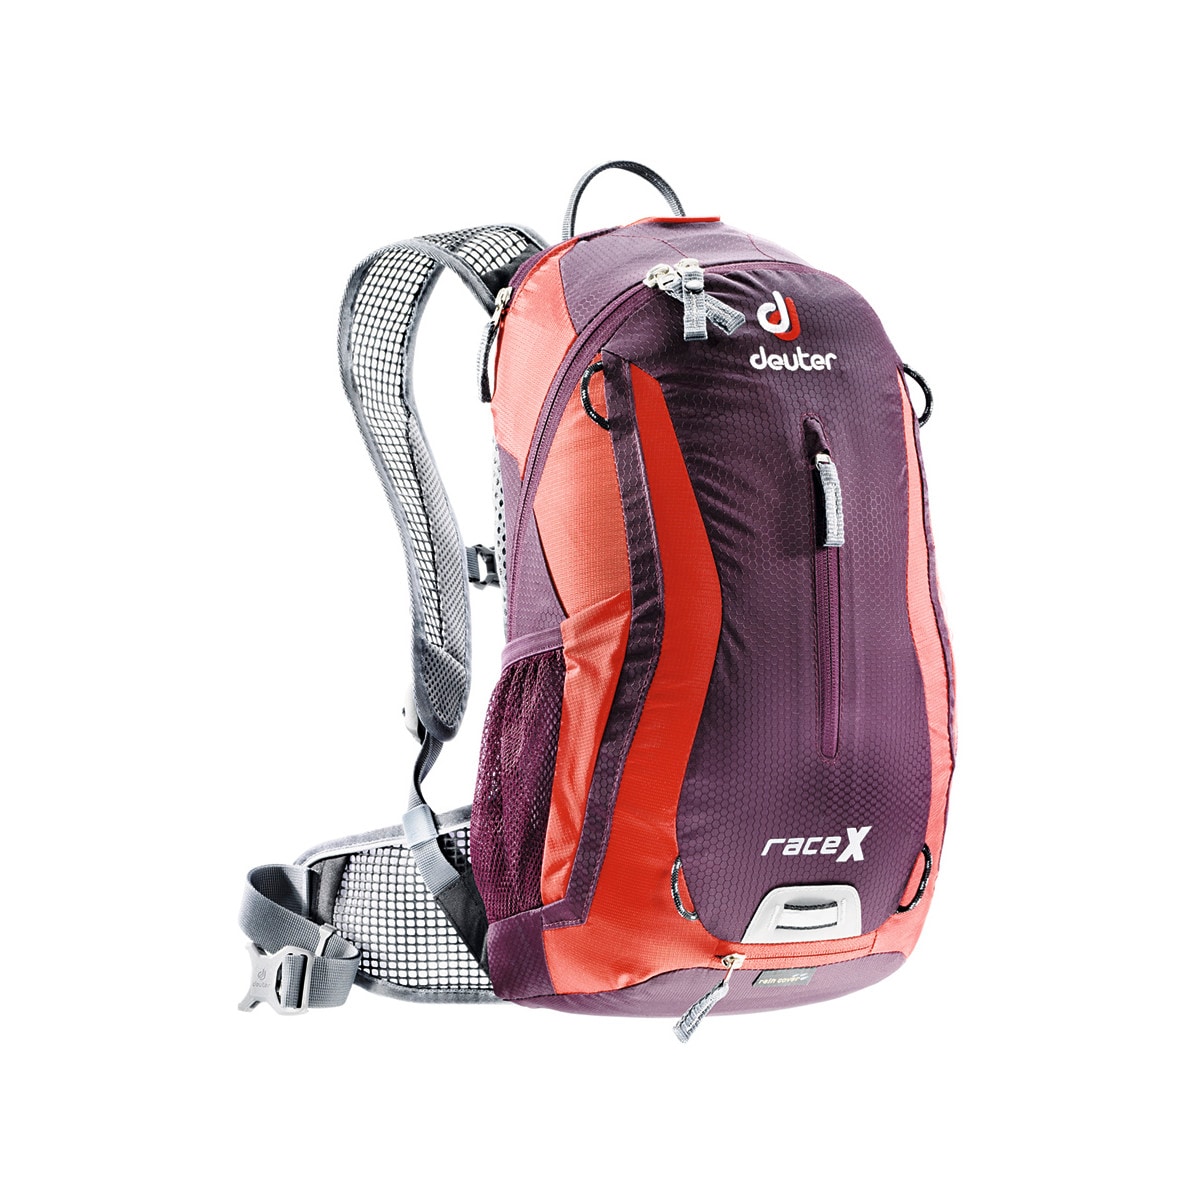 Deuter Race X 12-15L Backpack Hike & Camp